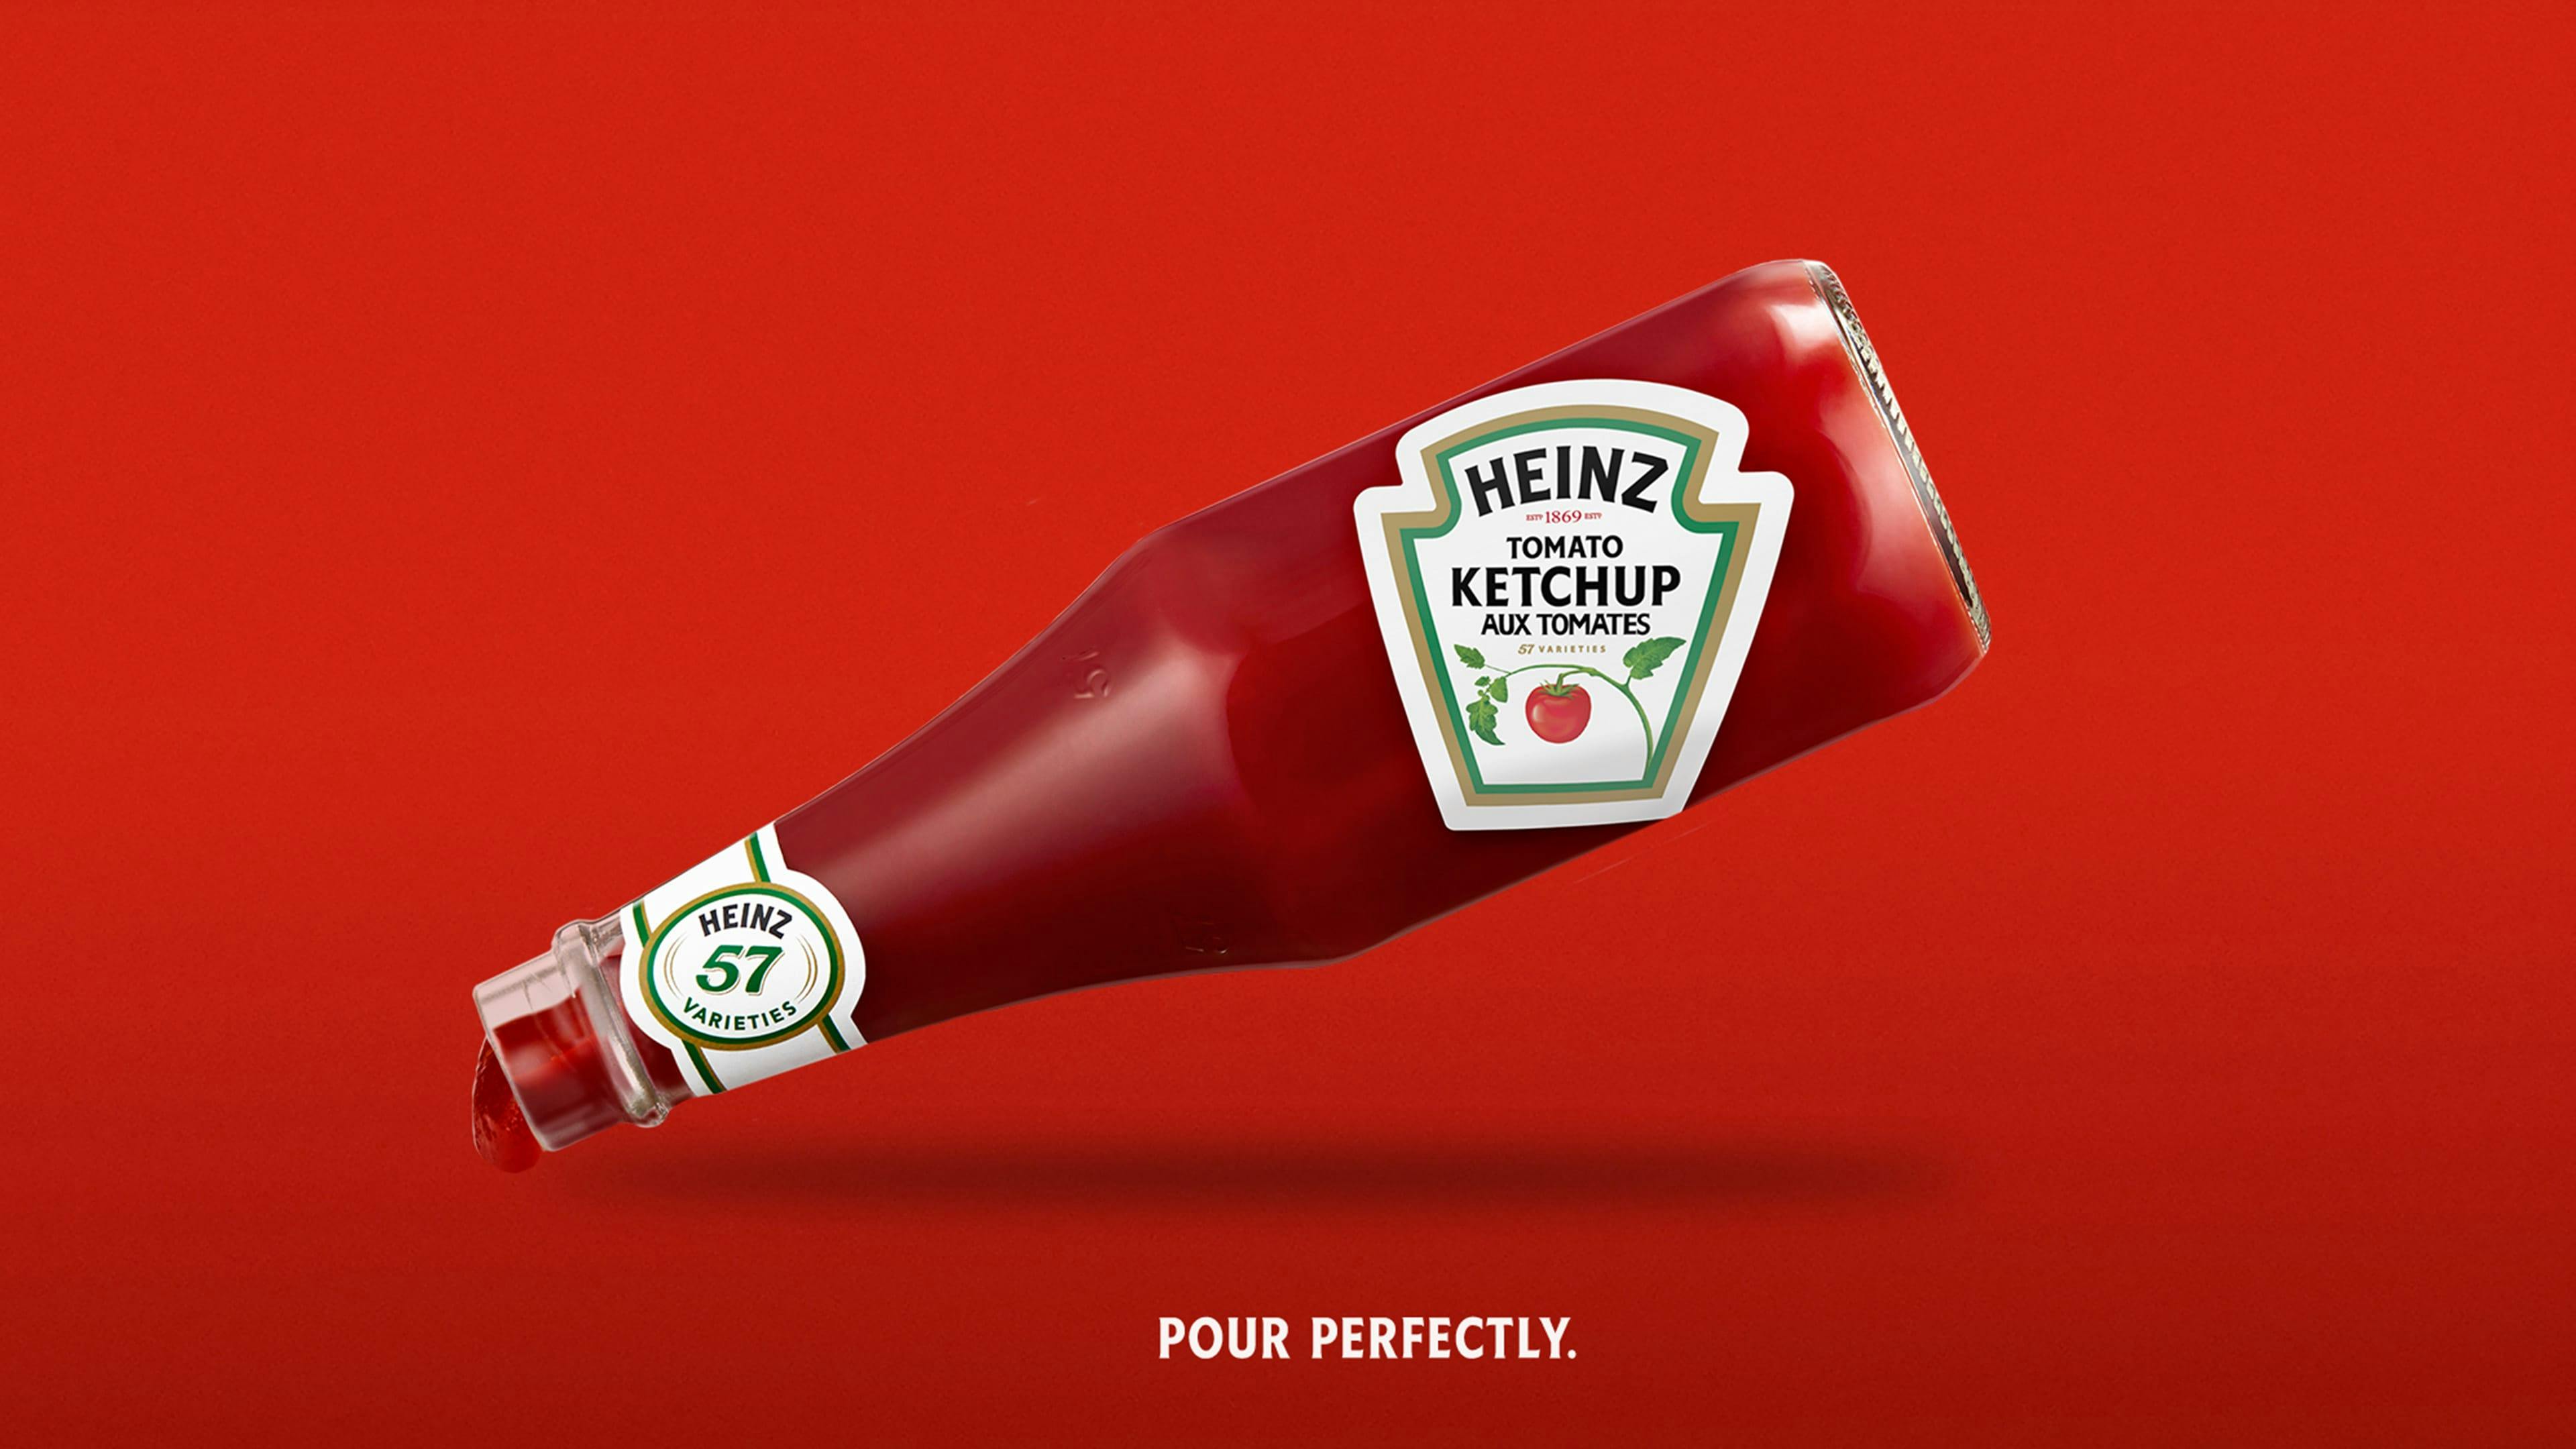 Heinz bottle on angle, logo straight.